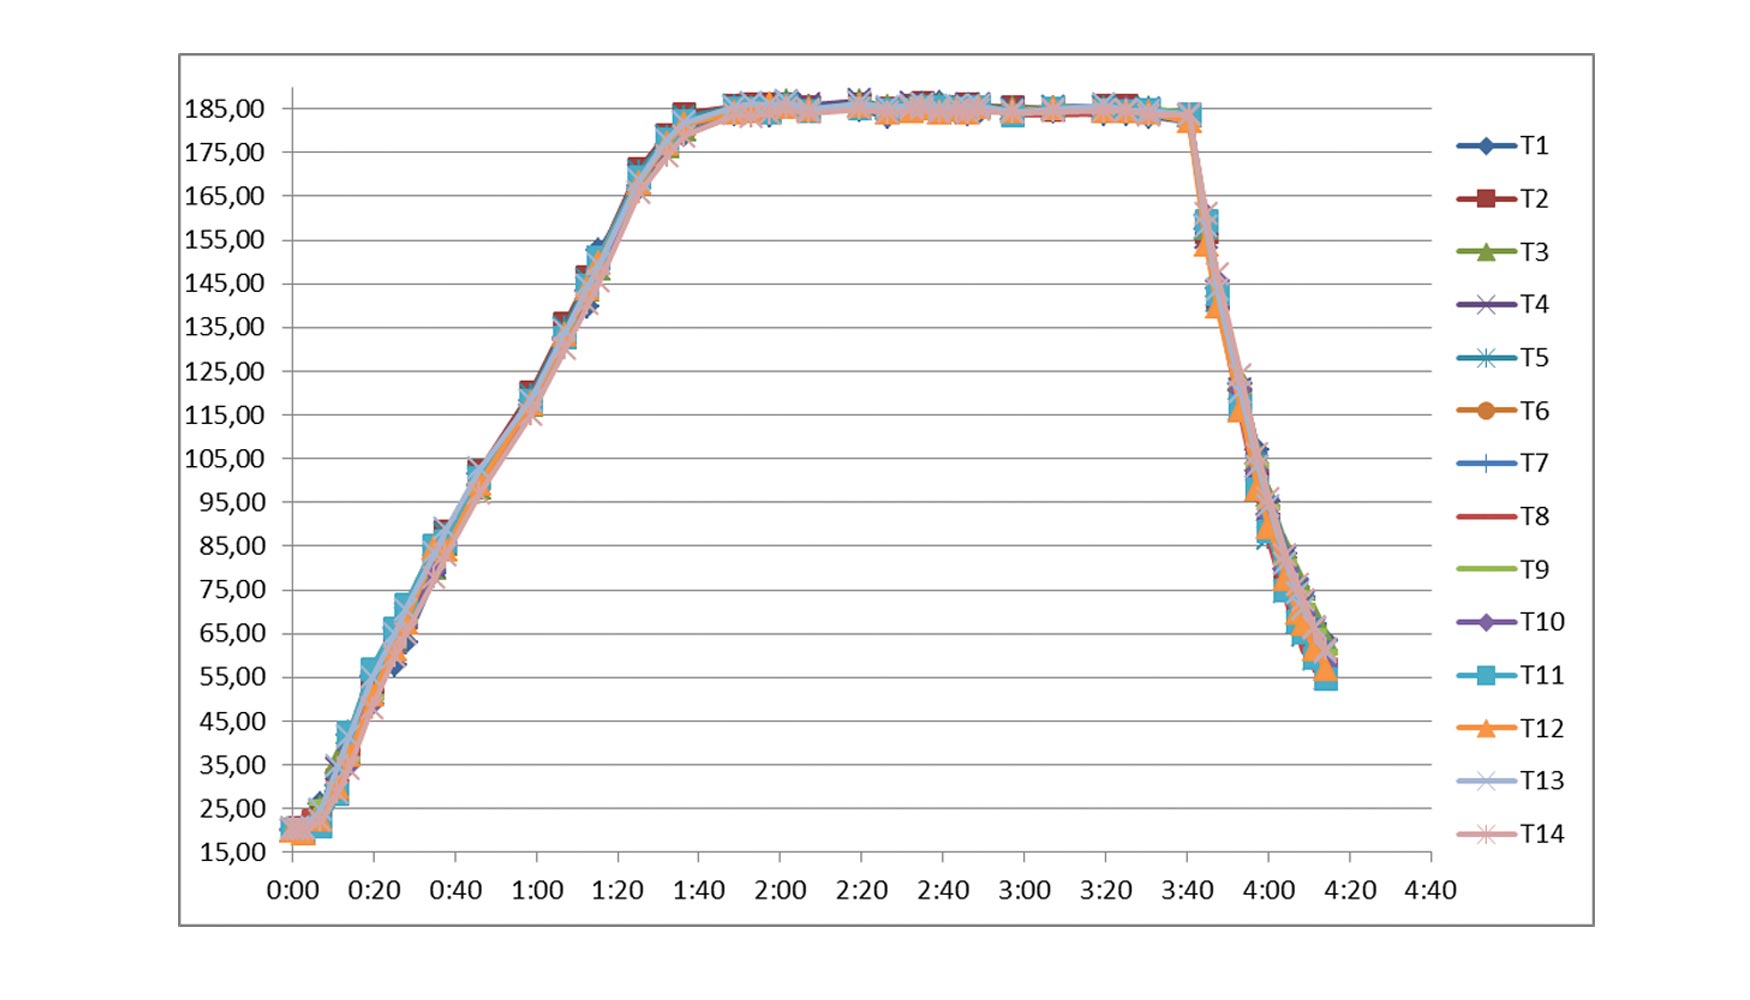 Figura 2. Temperatura (C) vs Tiempo (h:mm) - til en autoclave